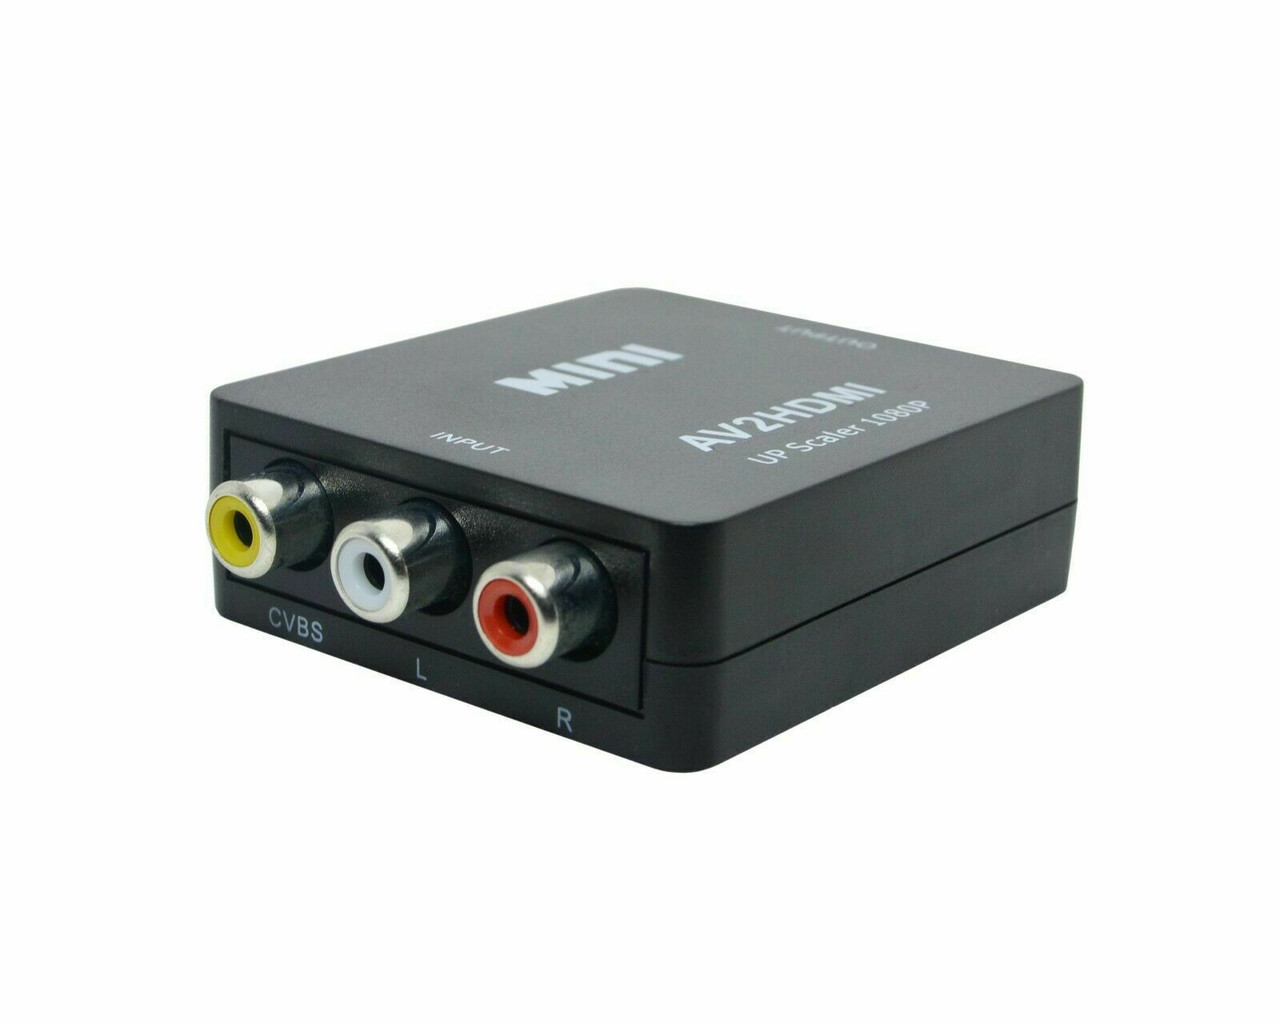 RCA to HDMI Converter Composite AV CVBS Video Adapter 720p 1080p Wii NES SNES